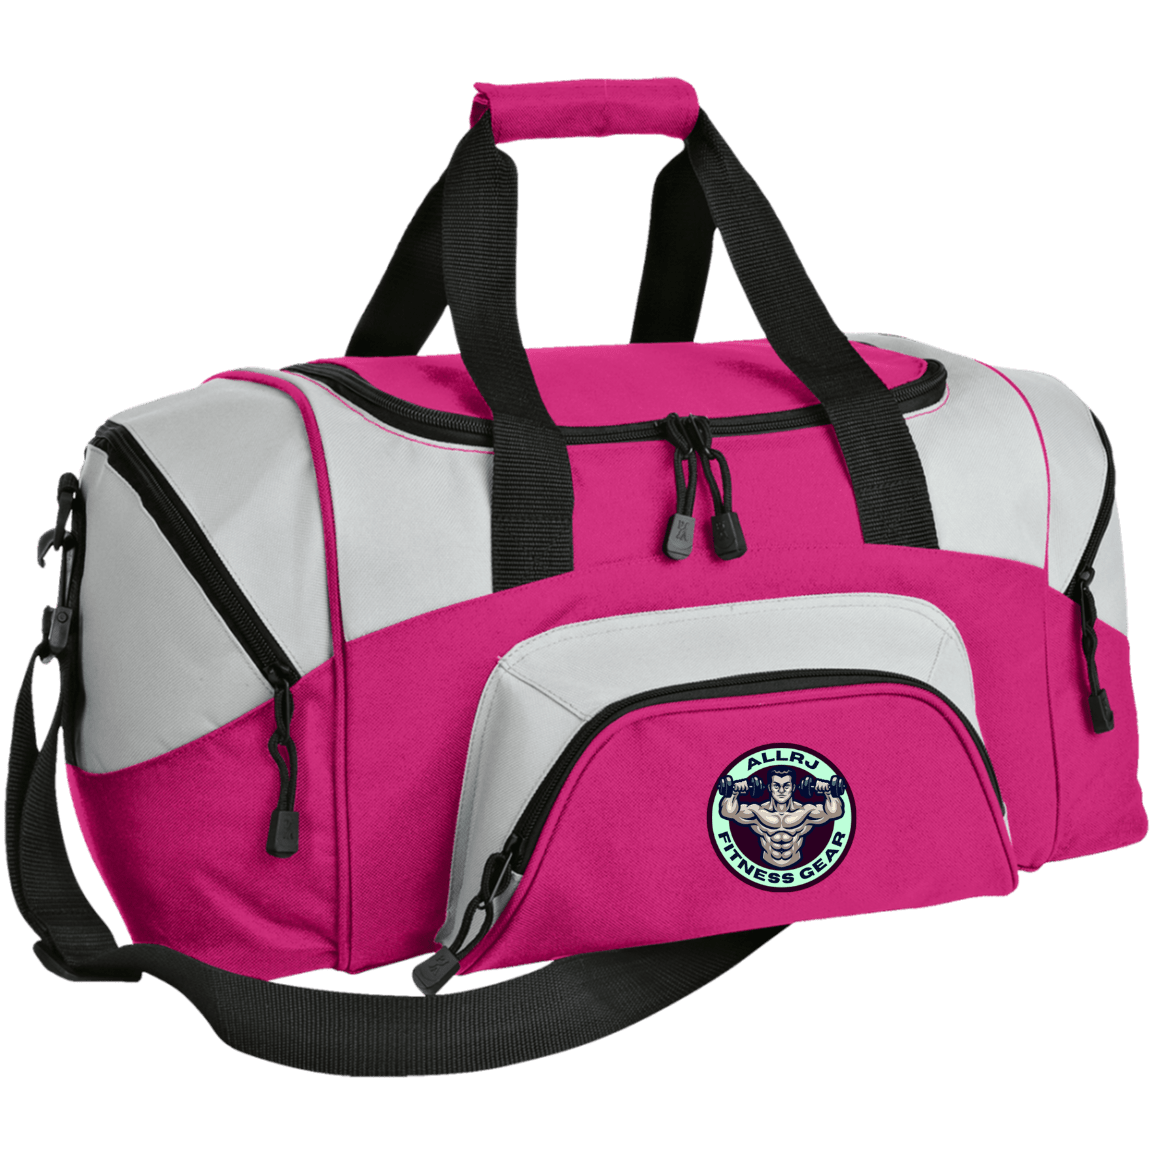 Allrj Gym Gains Duffel Bag Tropical Pink One Size